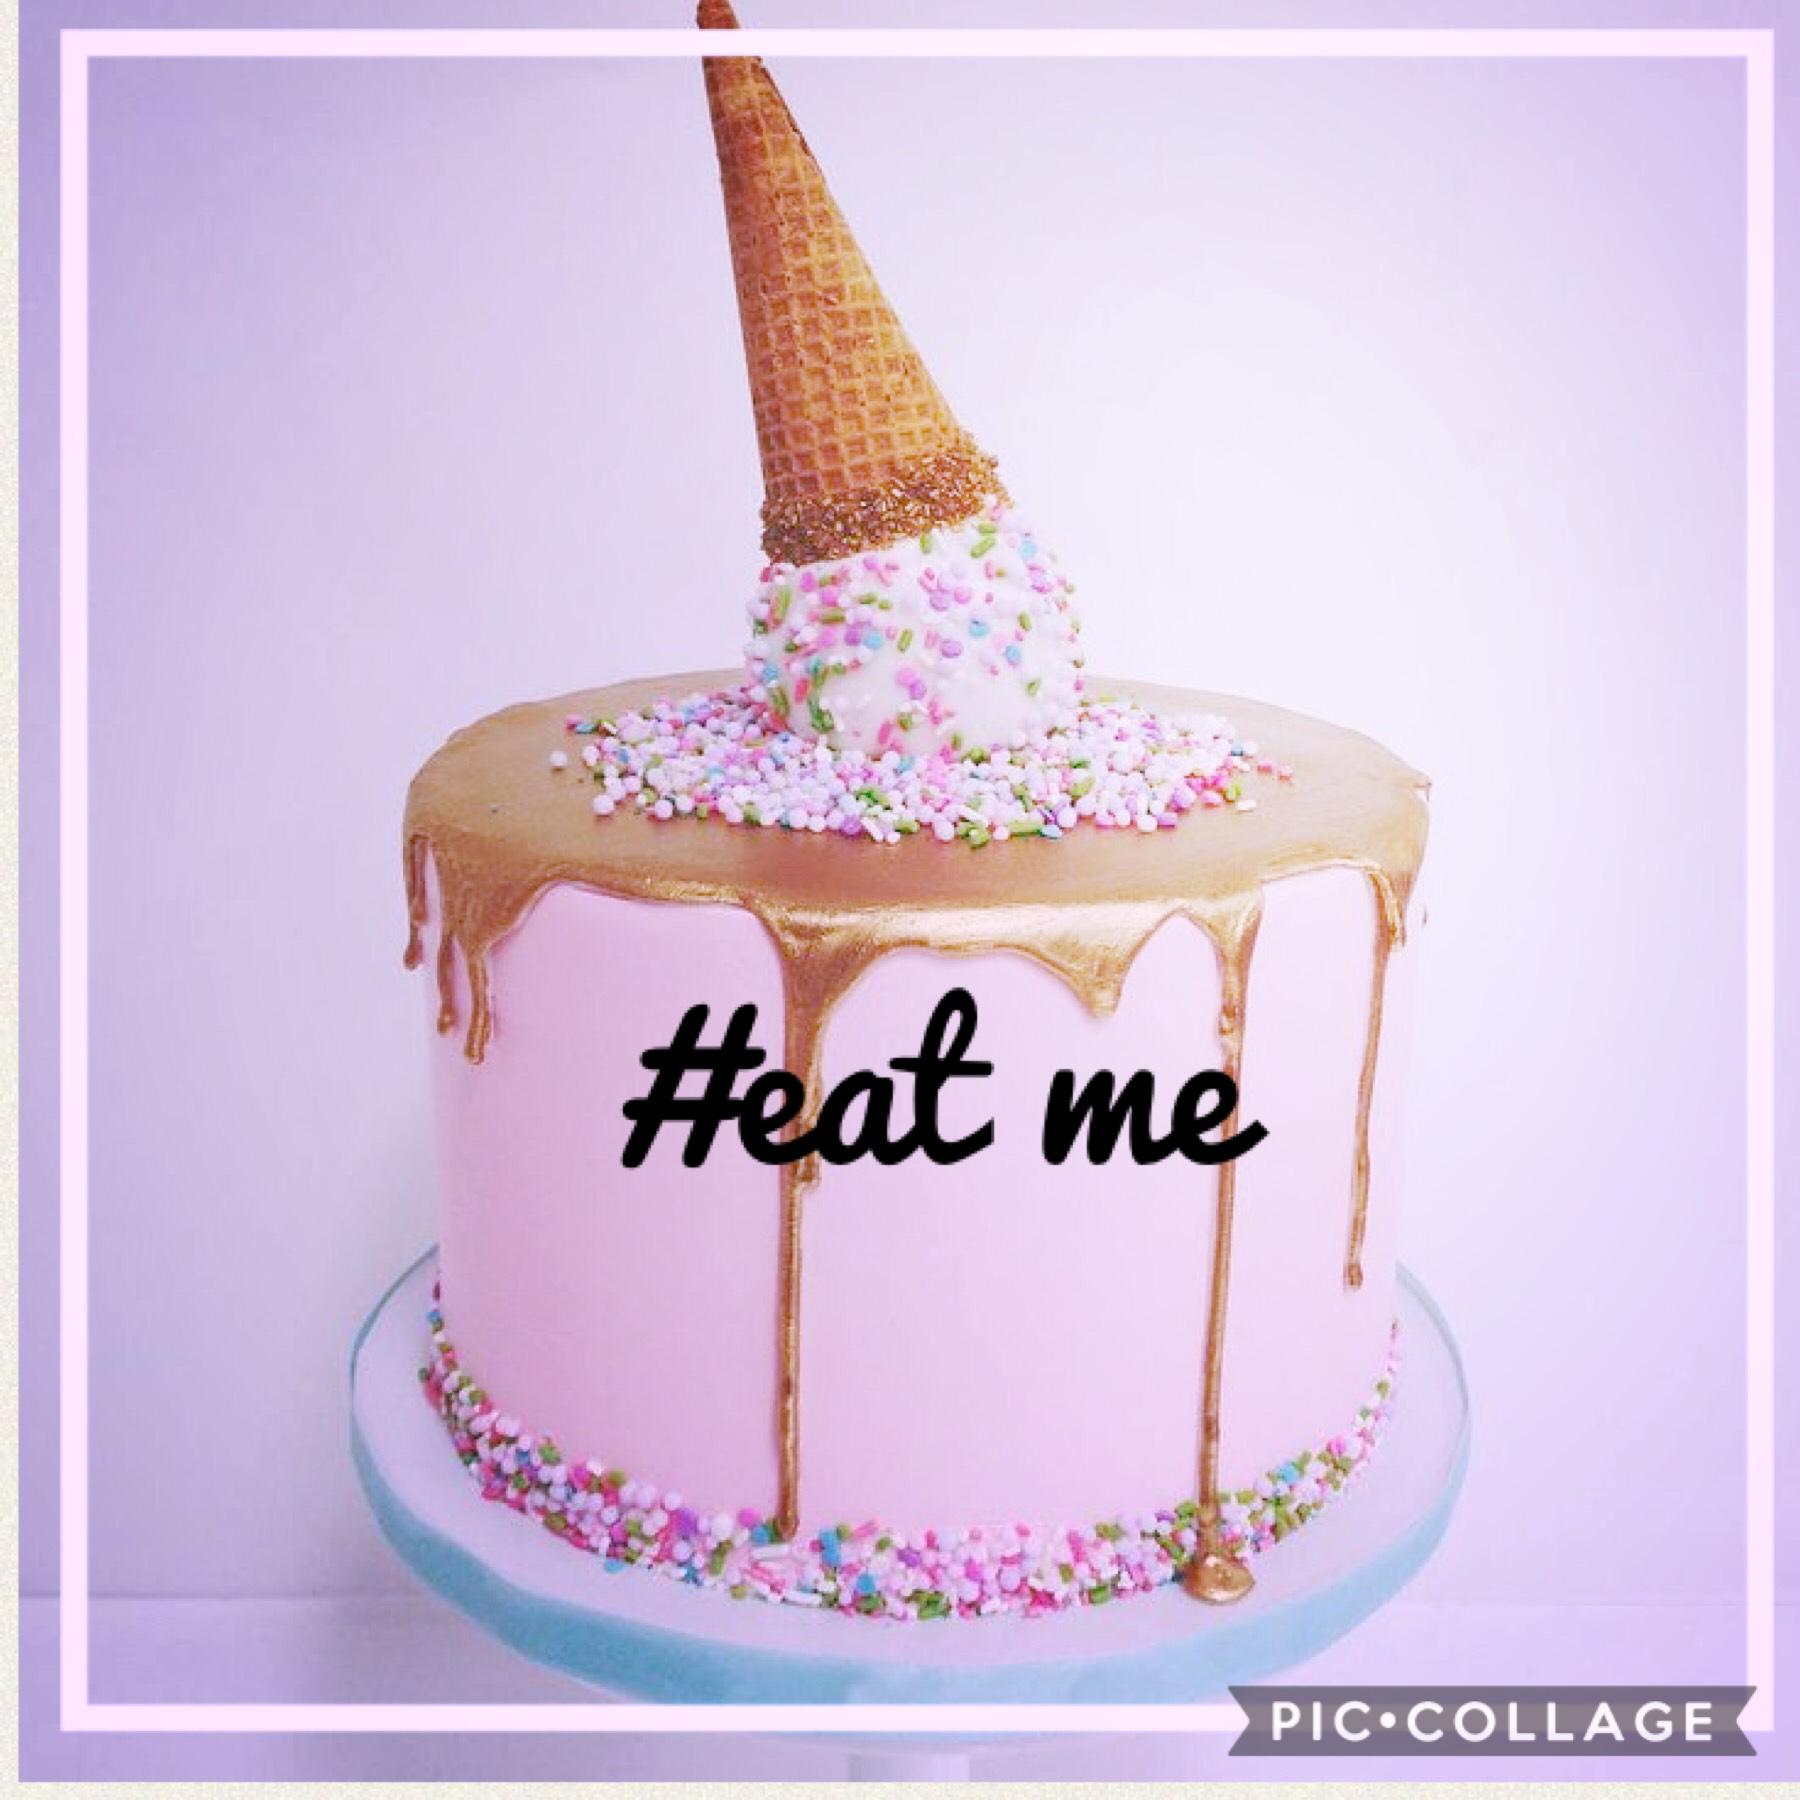 Eat my cake 🍰 